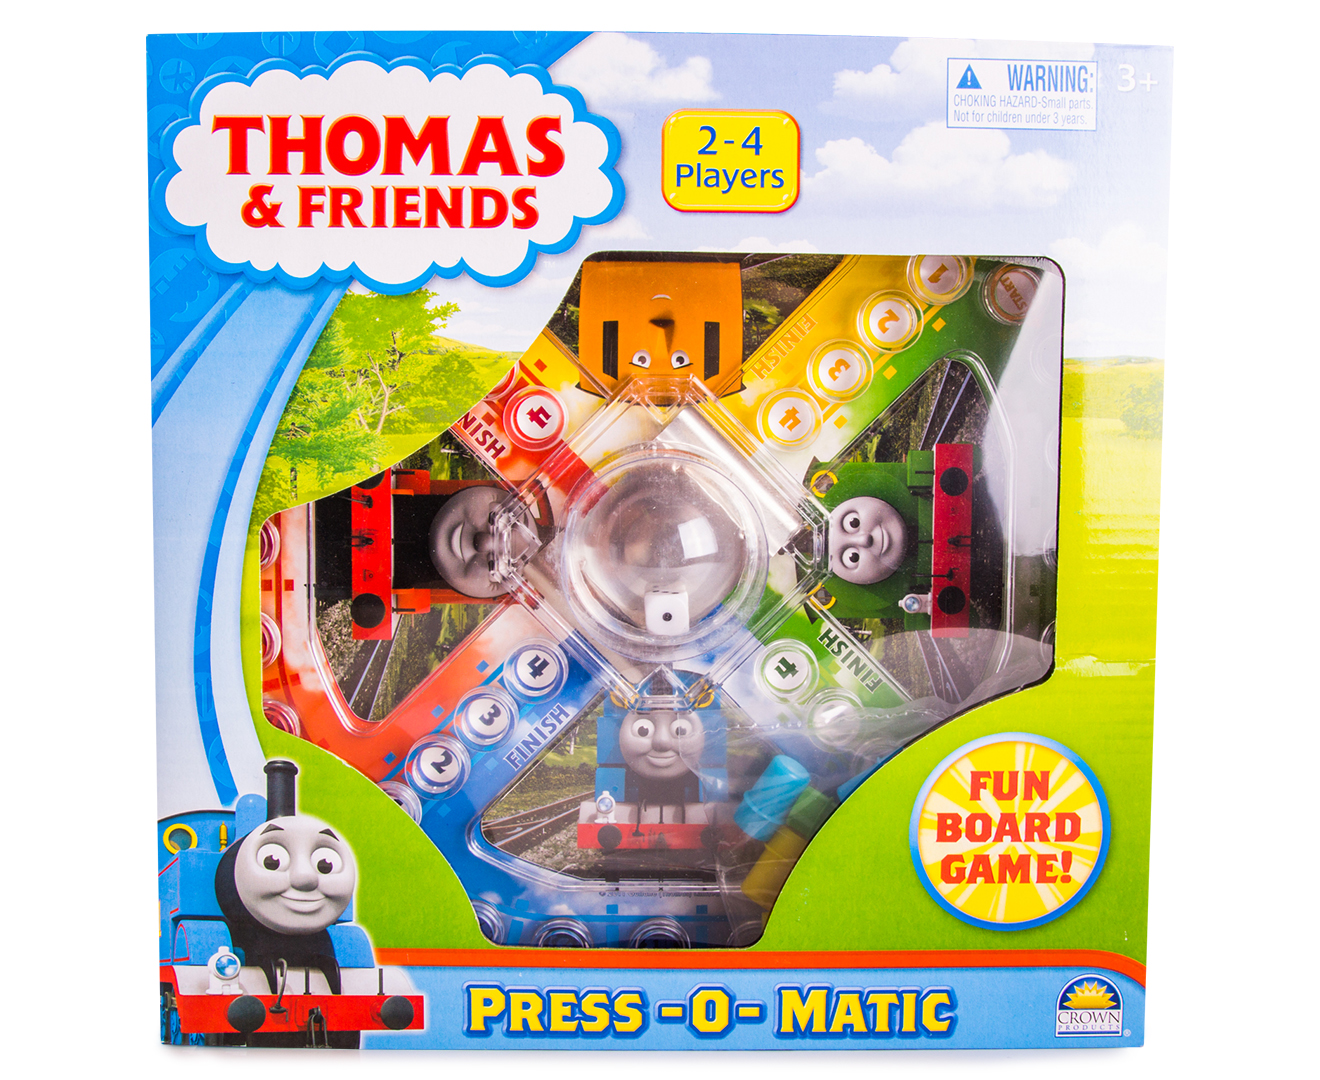 Thomas & Friends Press-O-Matic Board Game